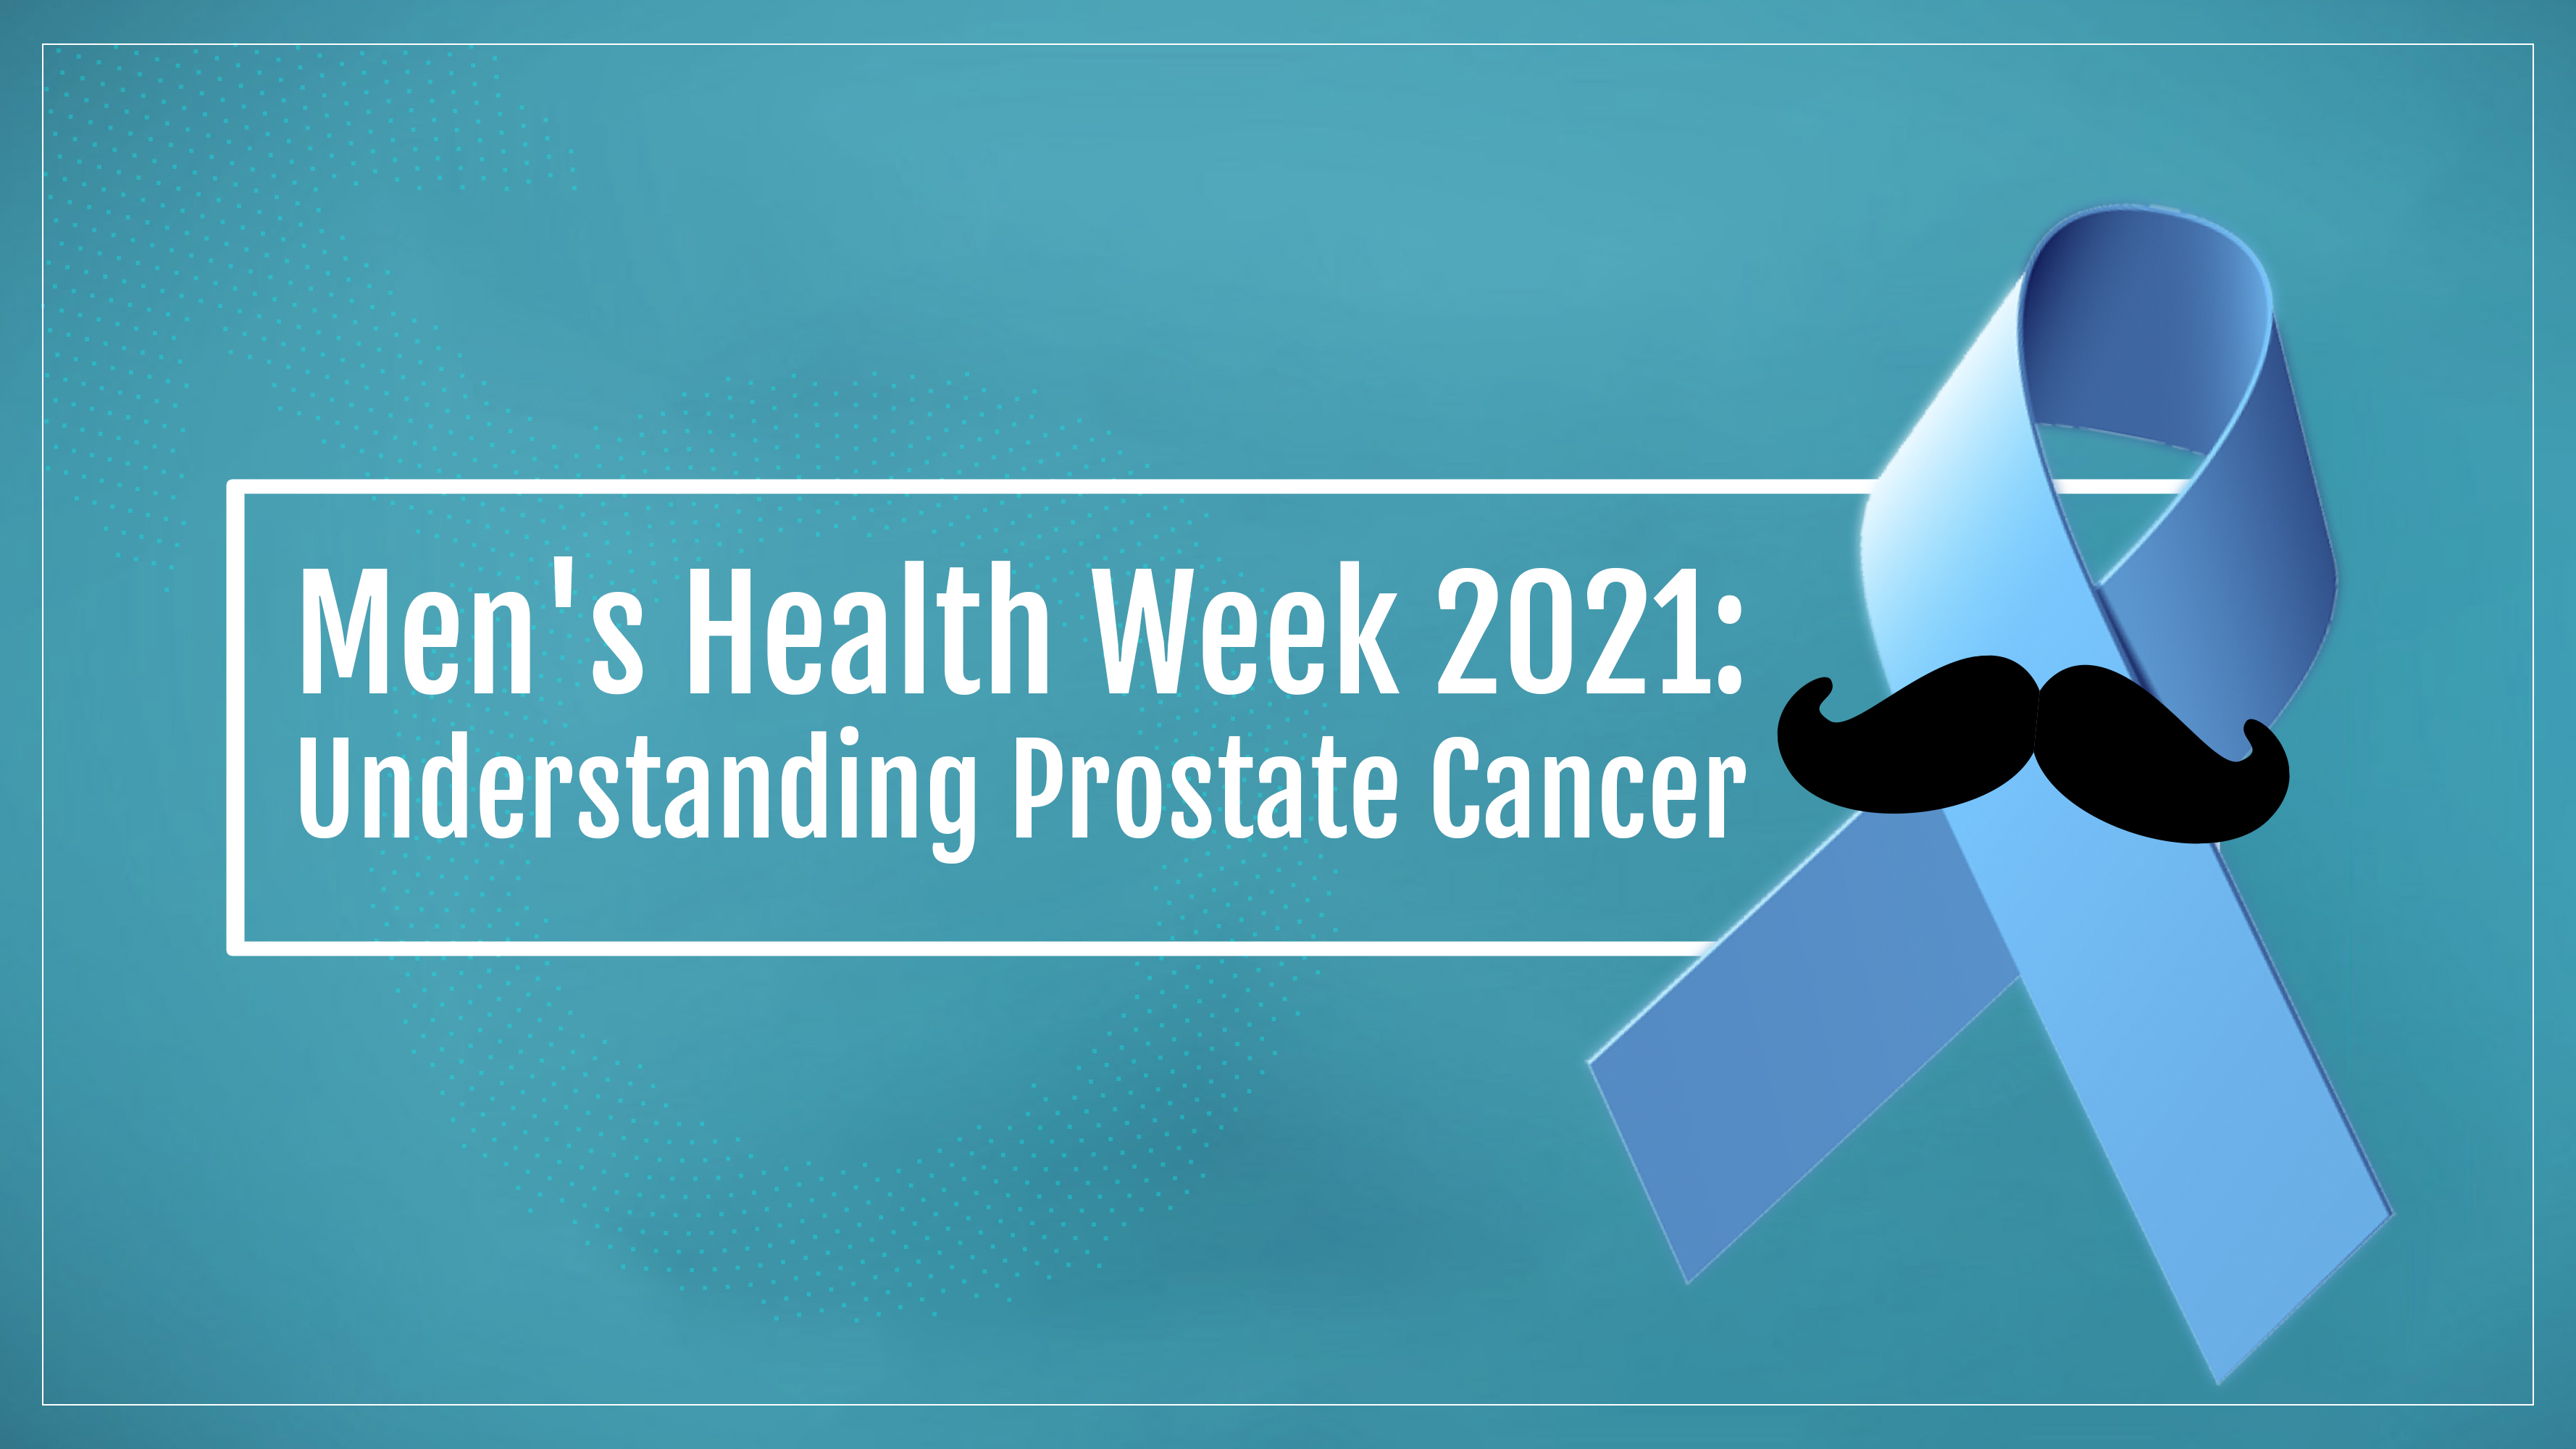 Prostate Cancer: Risk Factors, Symptoms and Prevention